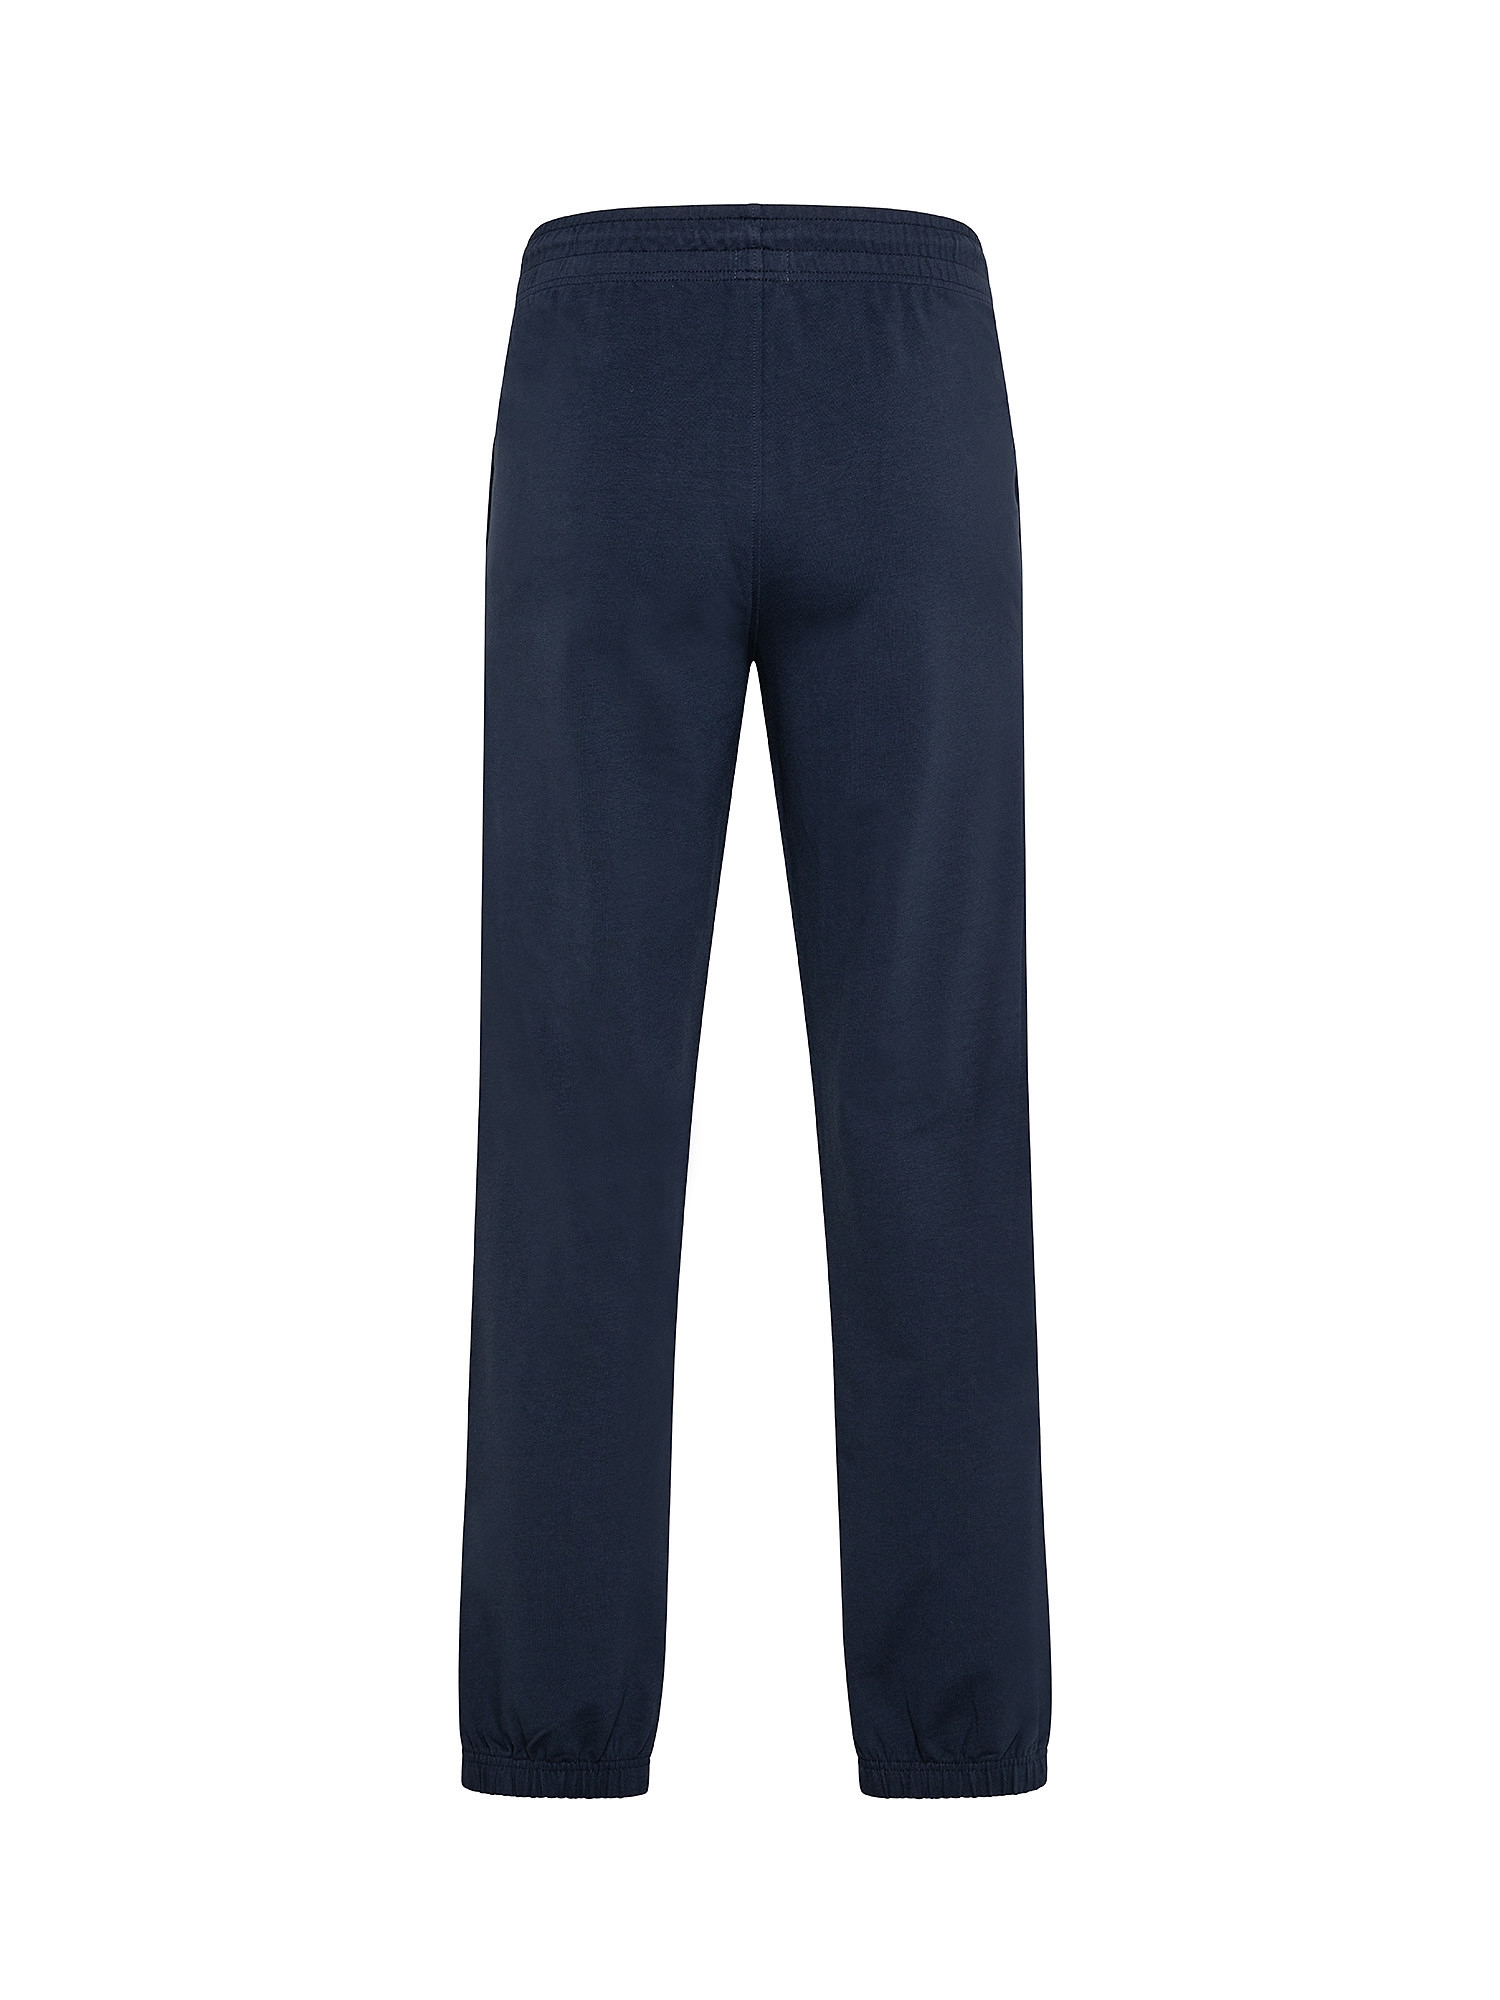 Pantalone in felpa, Blu, large image number 1